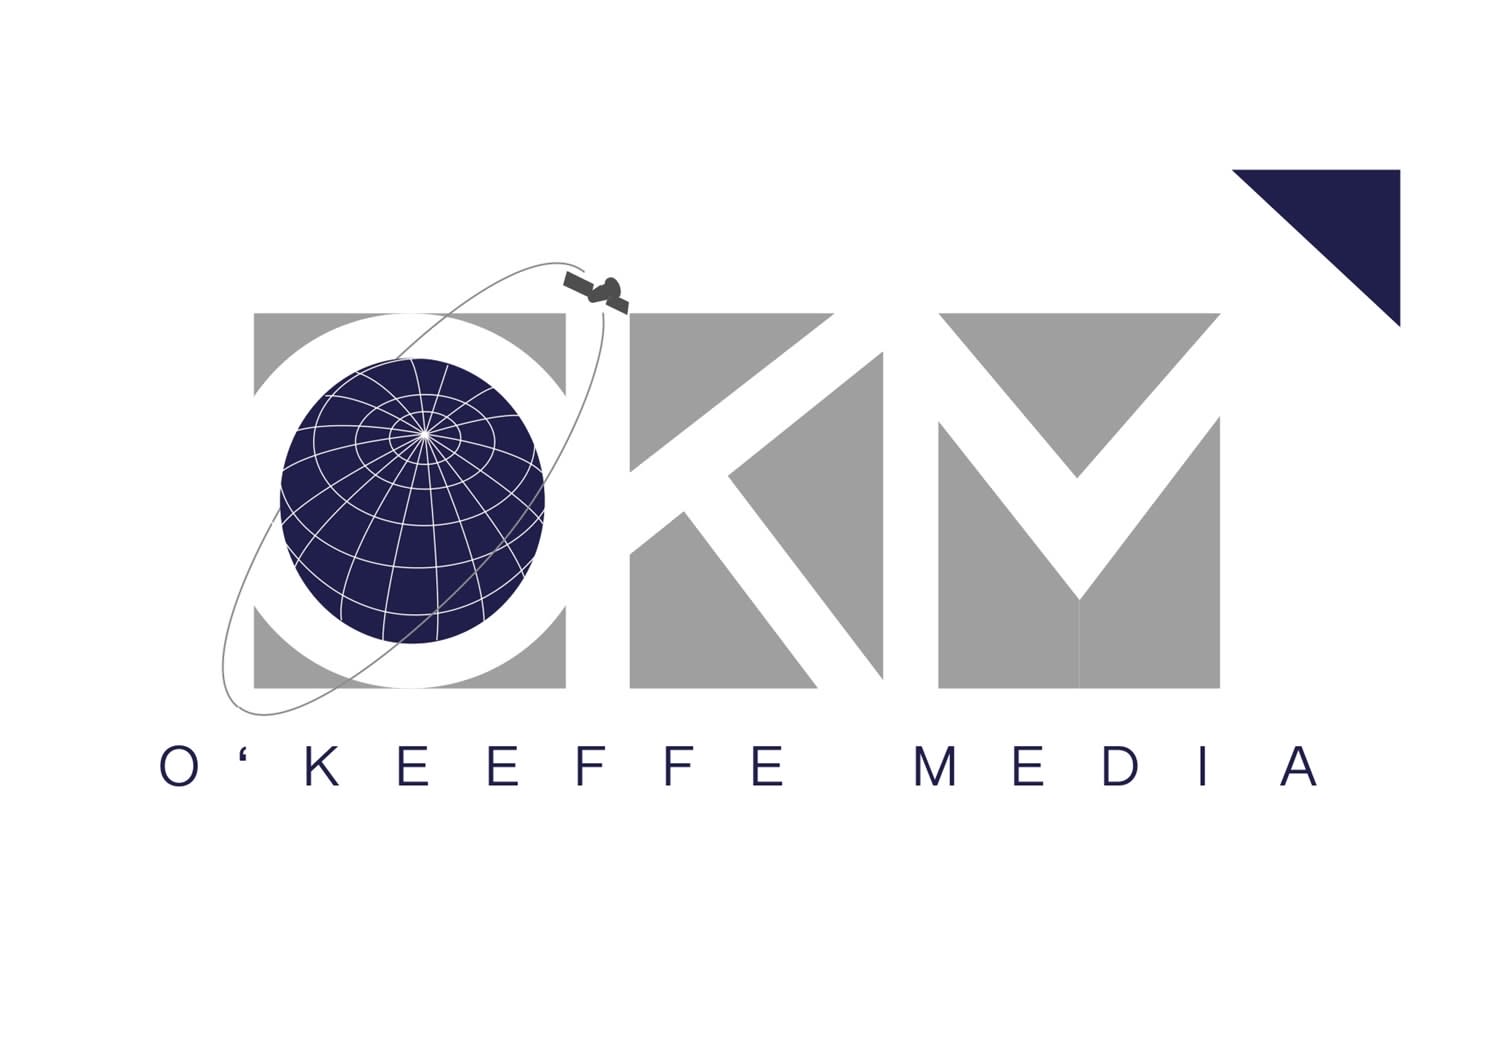 O'Keeffe Media